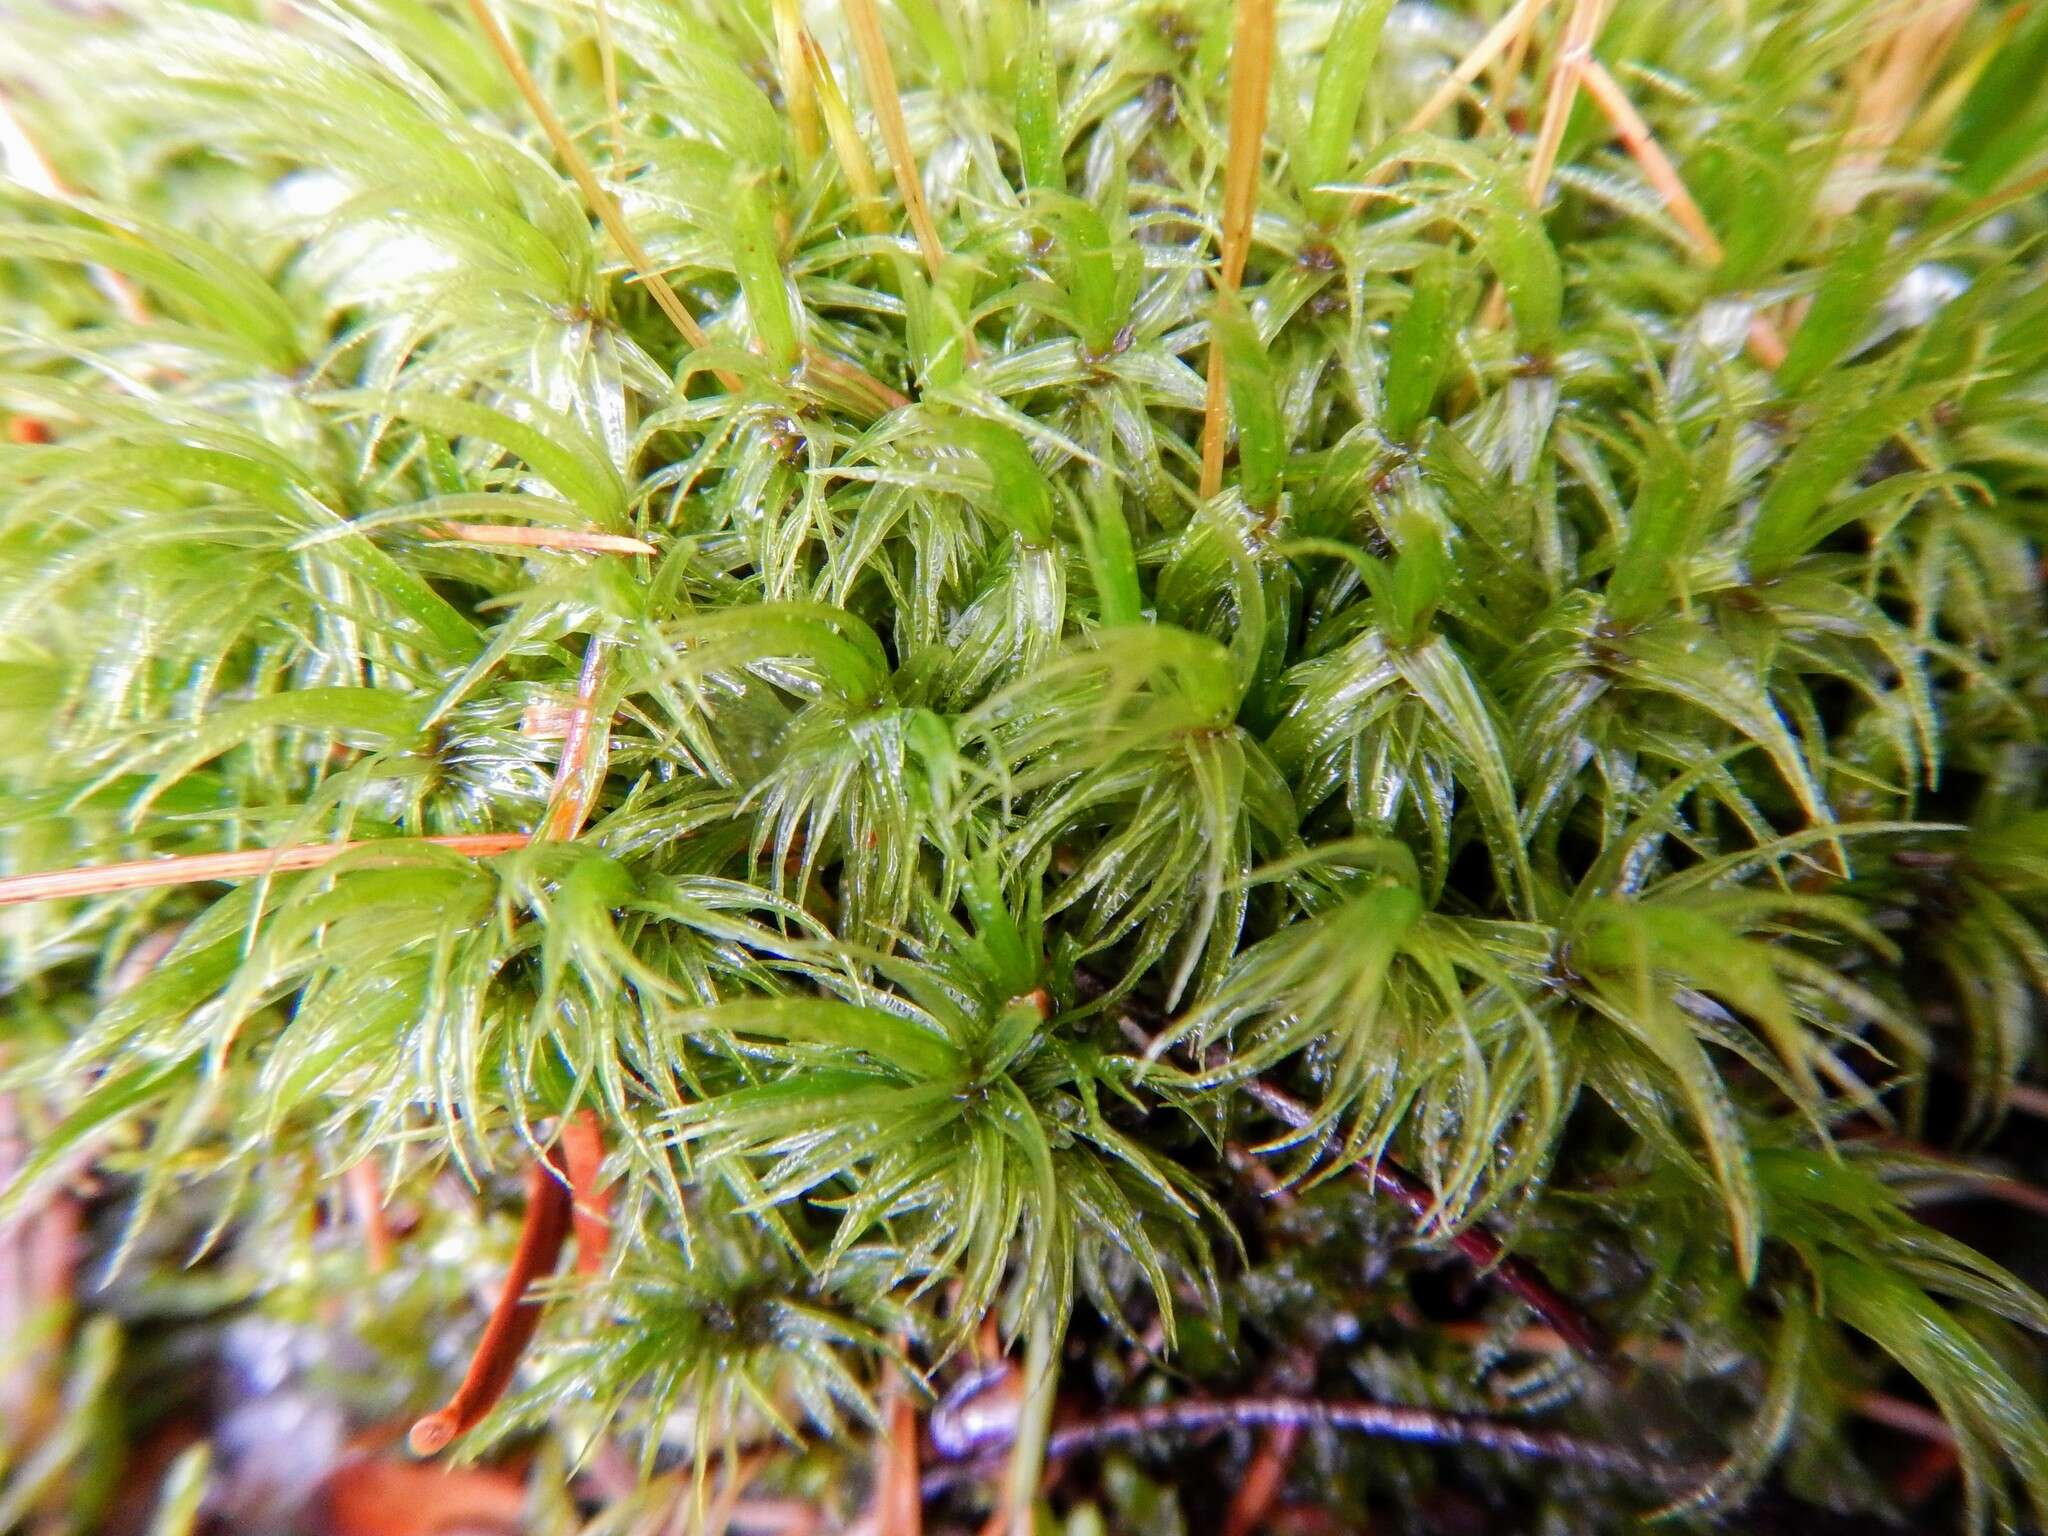 Image of Ontario dicranum moss